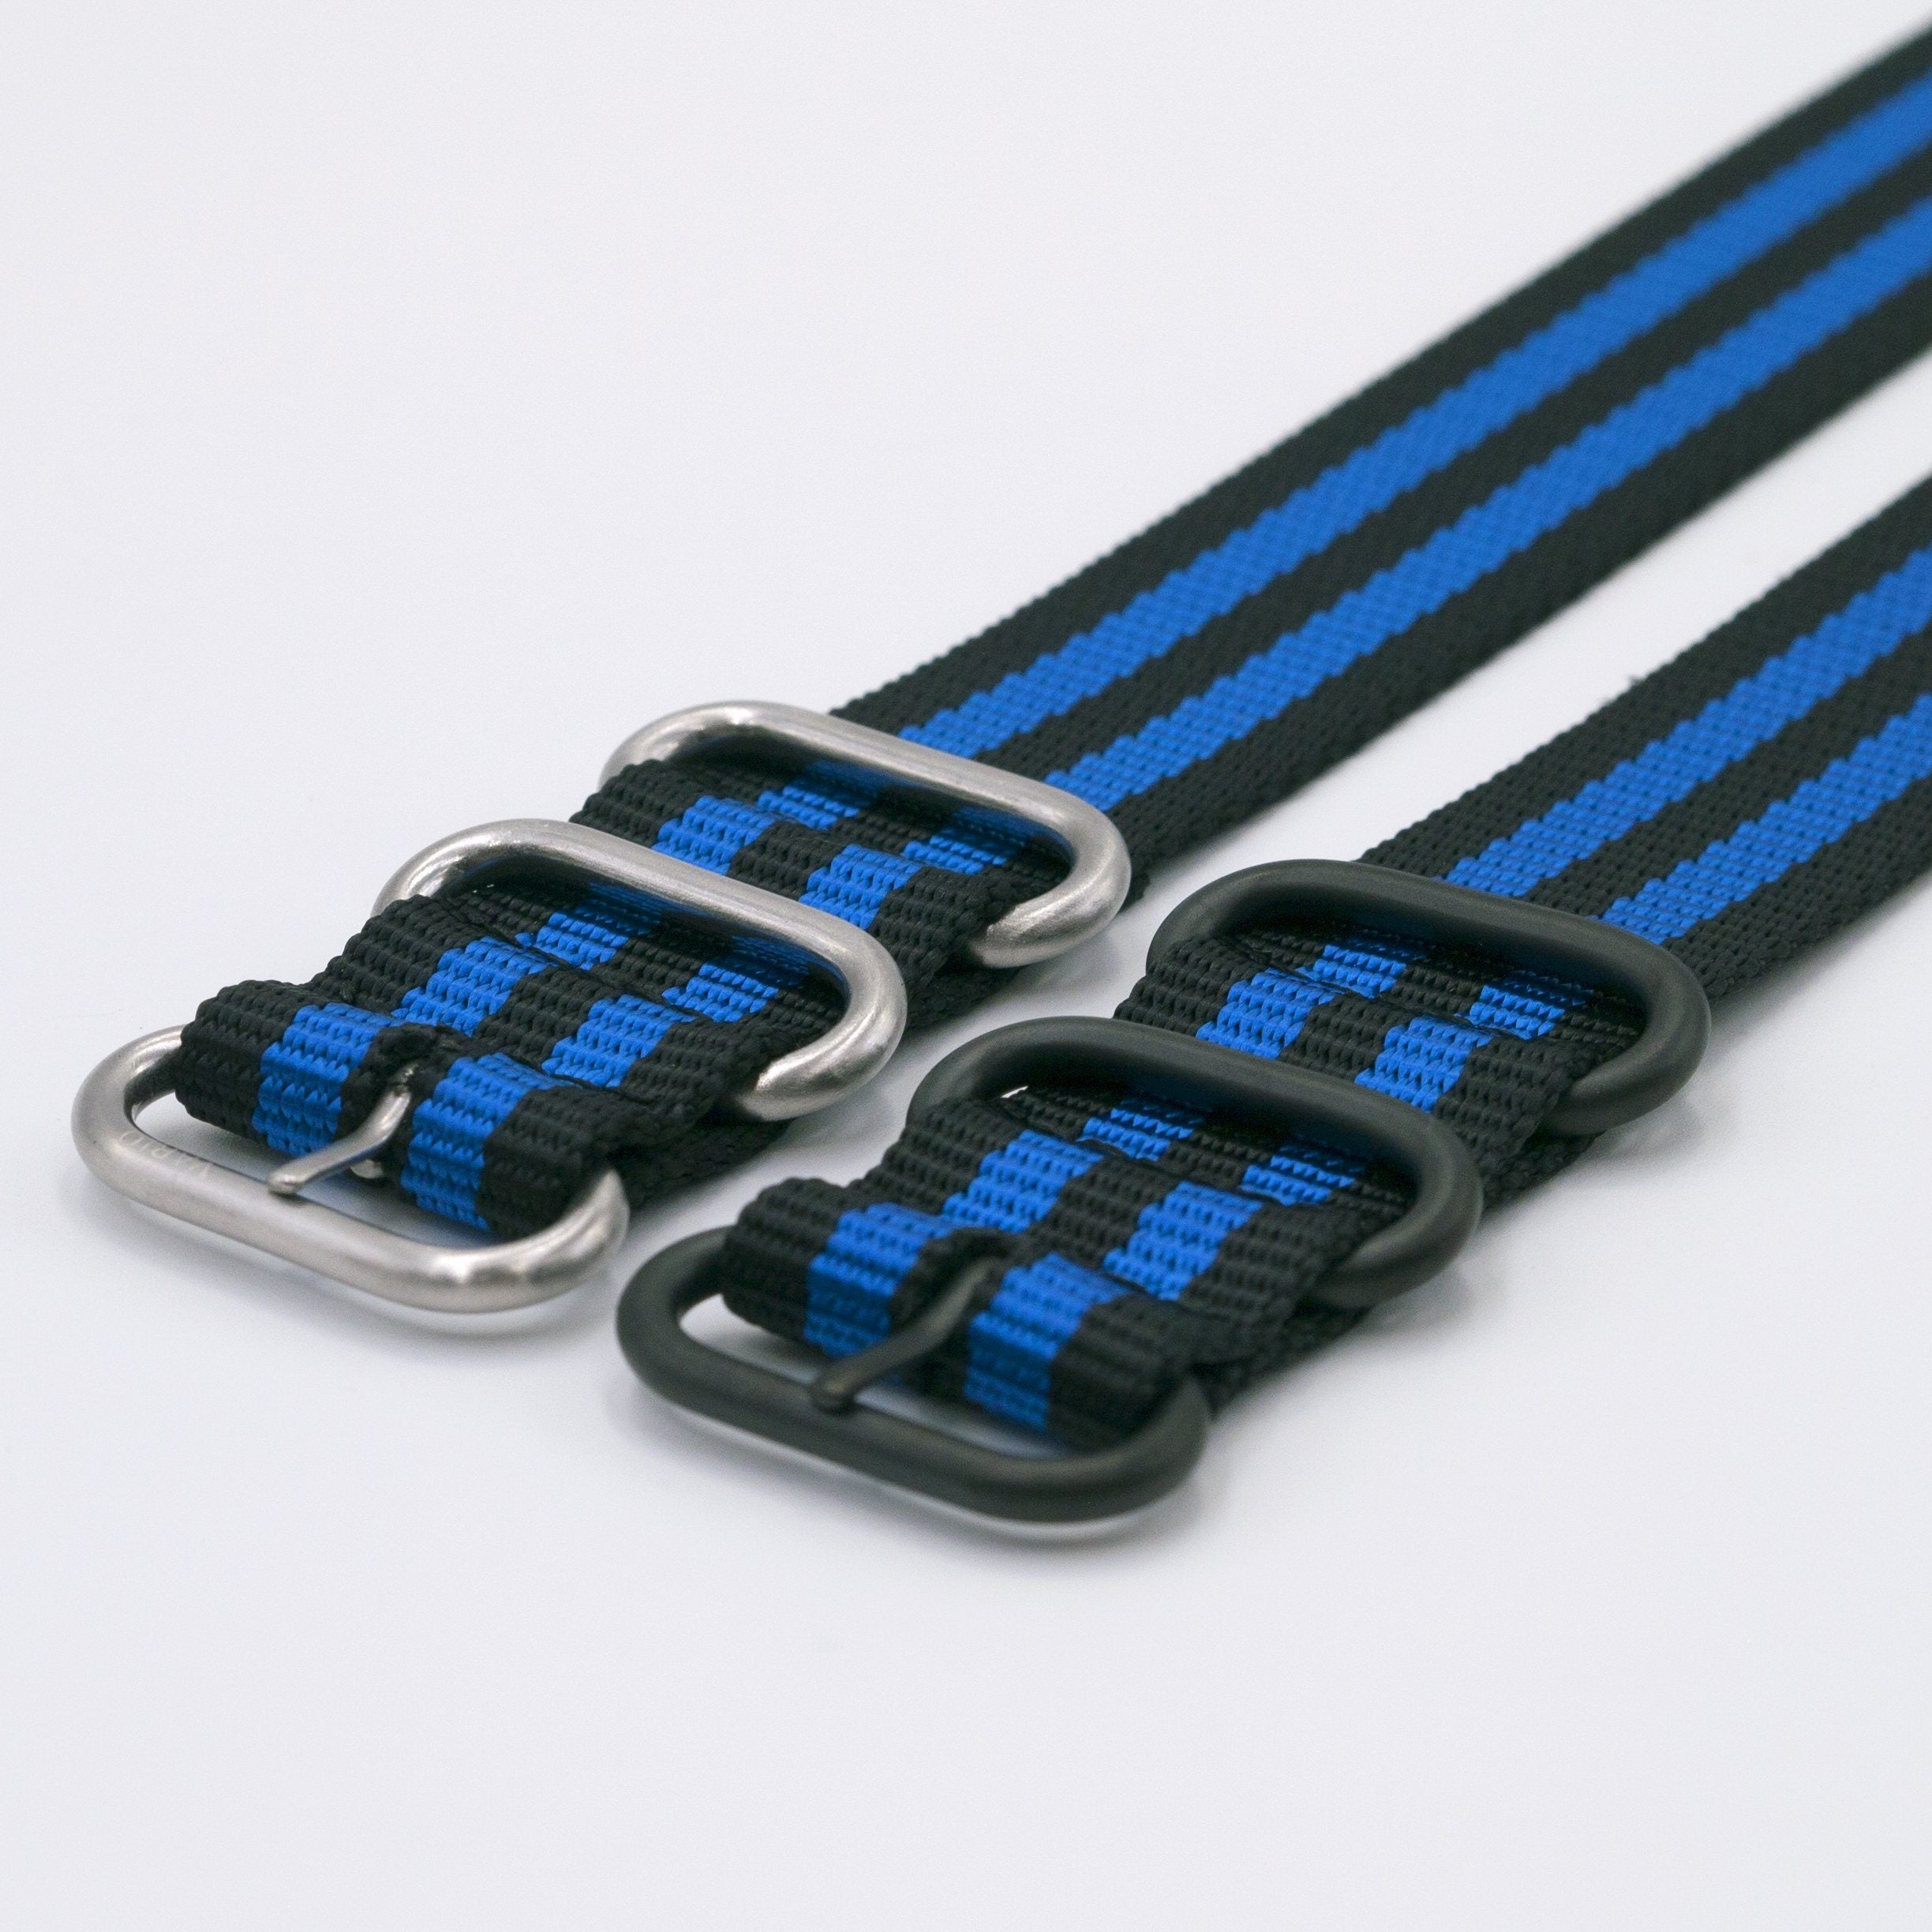 vario ballistic nylon blue black stripe maratac strap with casio g shock adapter silver and black buckle